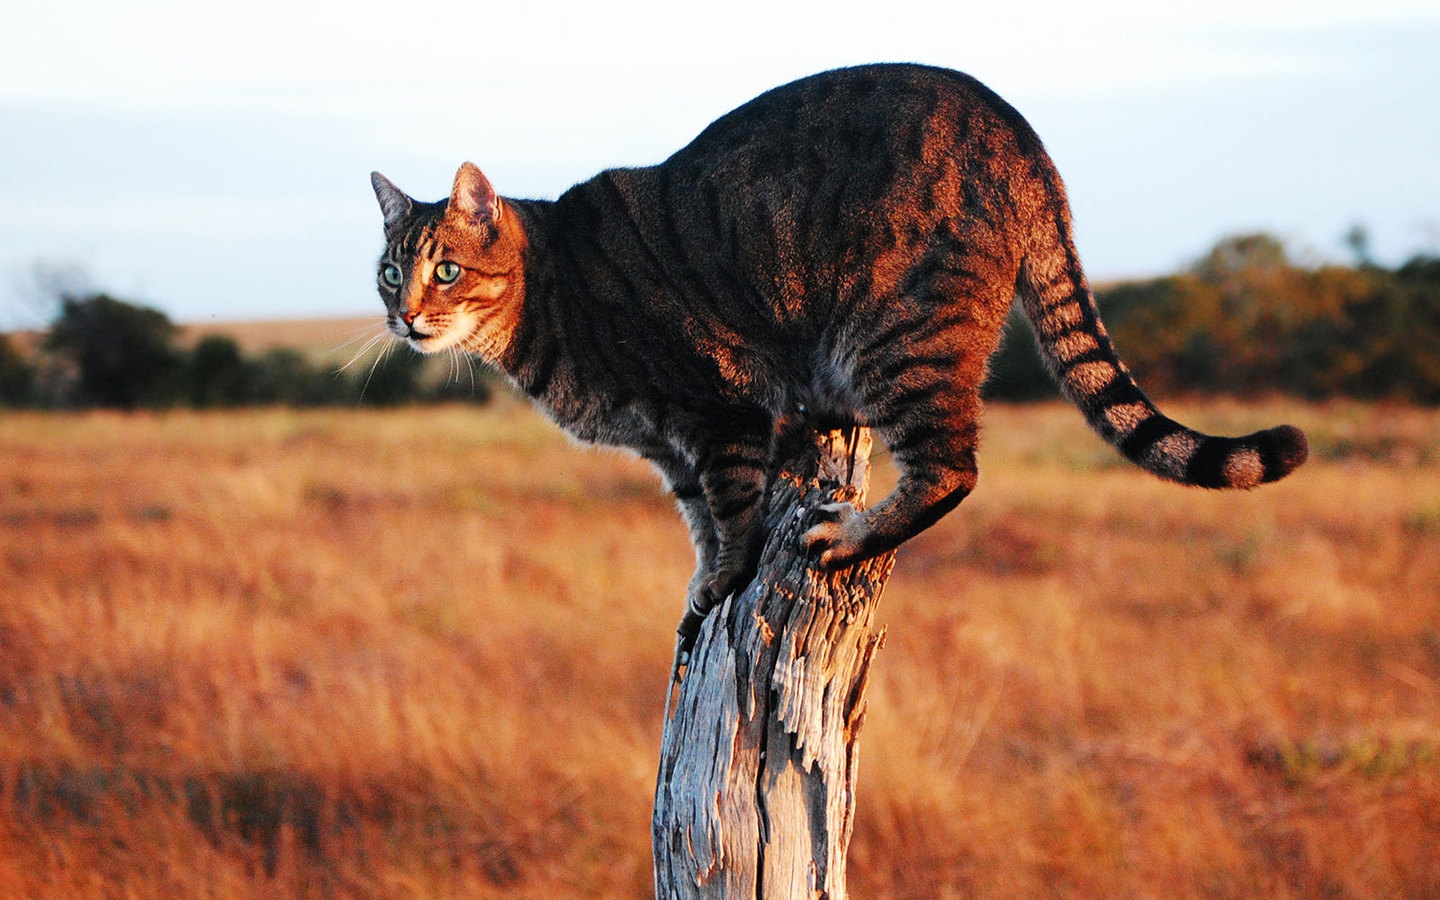 Savannah Cat on Stump for 1440 x 900 widescreen resolution